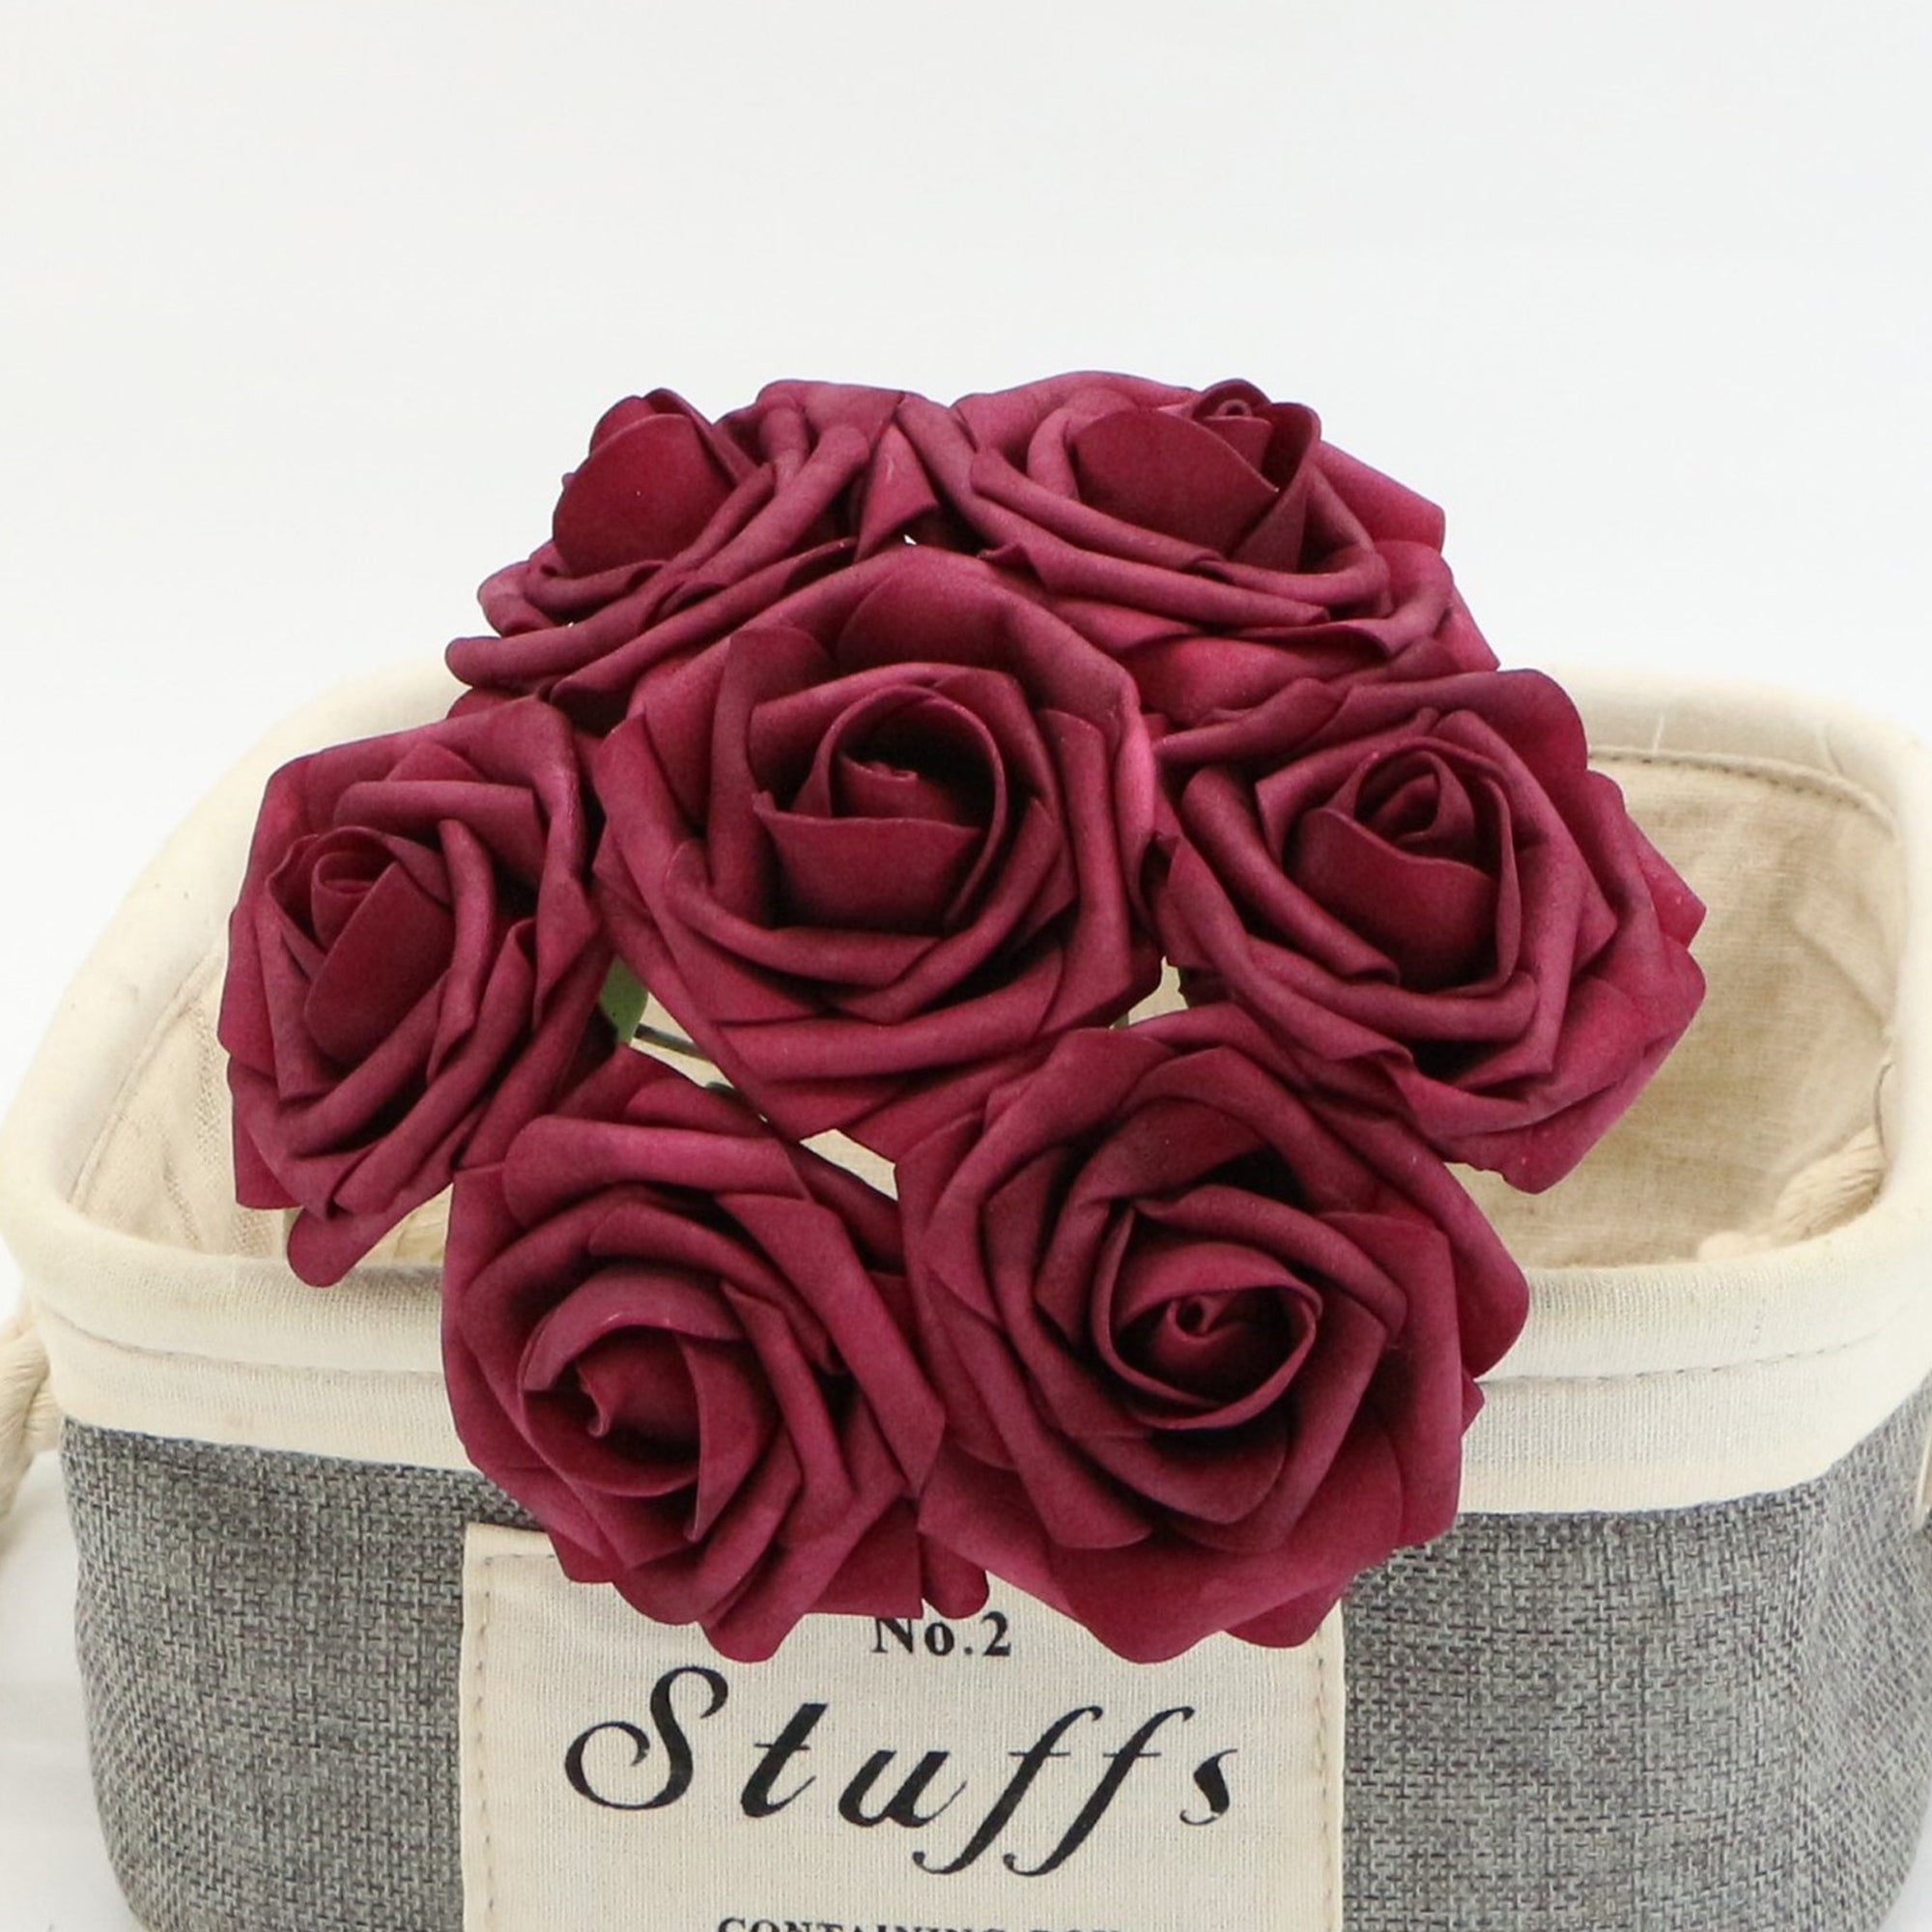 Burgundy Roses Artificial Bulk Wedding Flowers